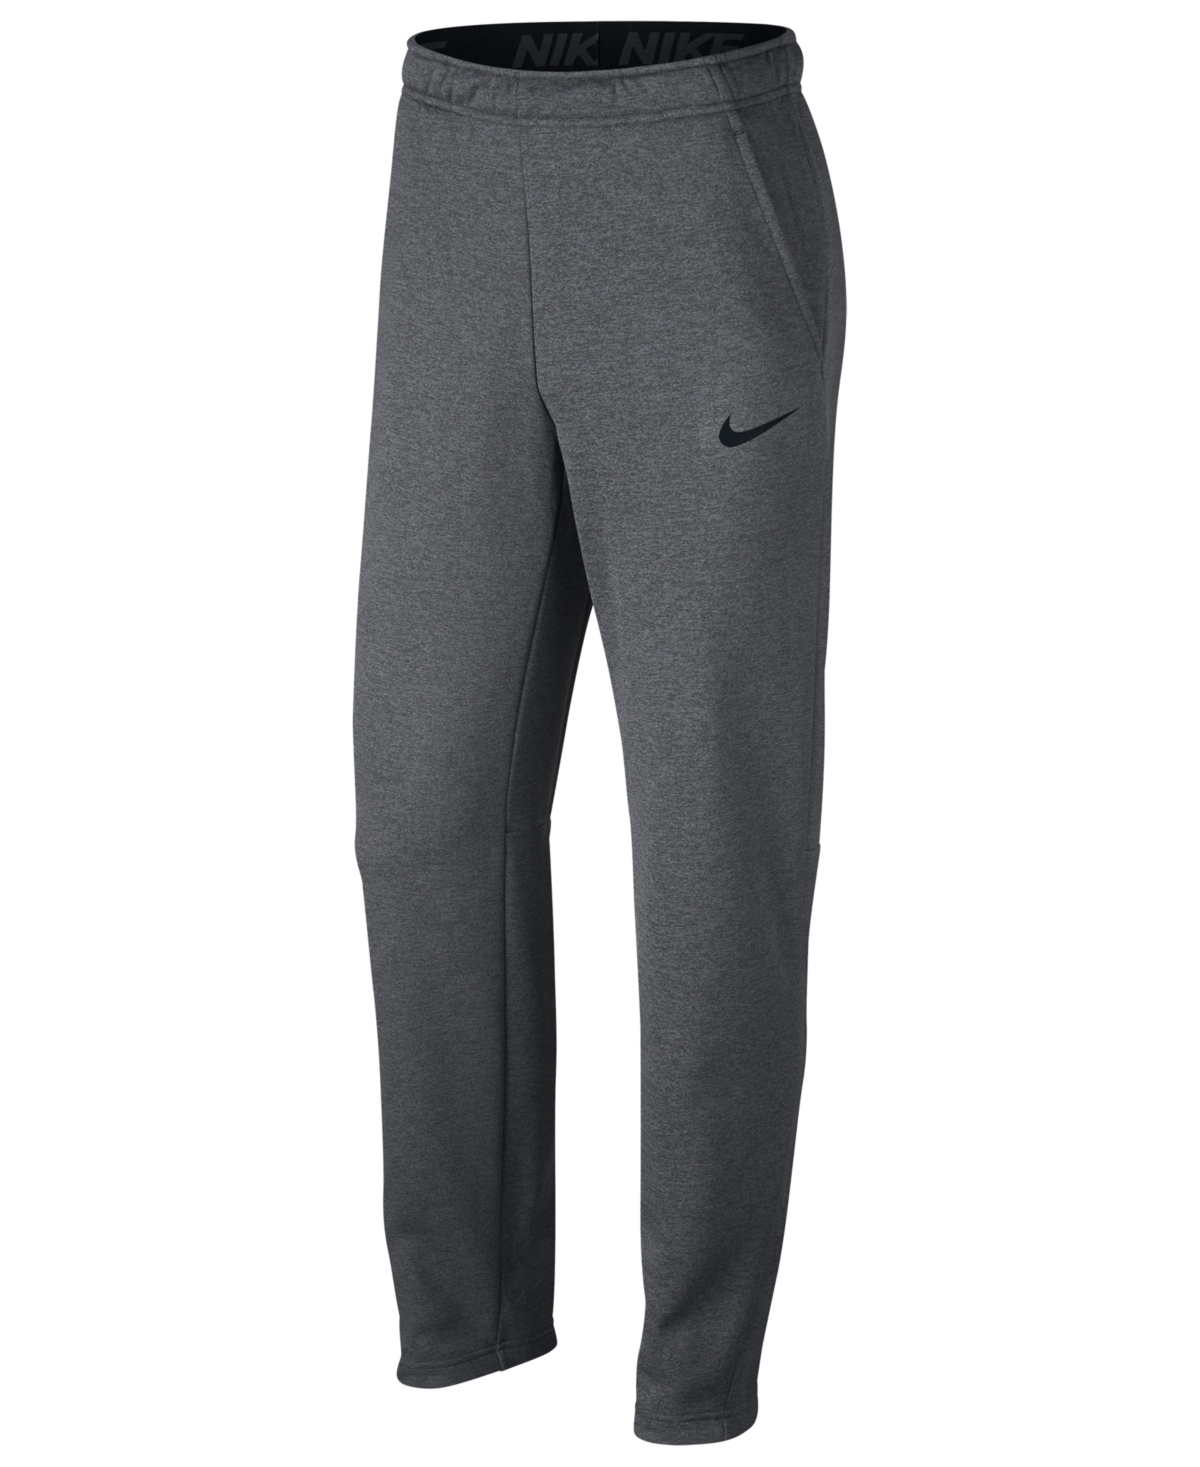 UPC 886668222103 product image for Nike Men's Therma Open Bottom Training Pants | upcitemdb.com